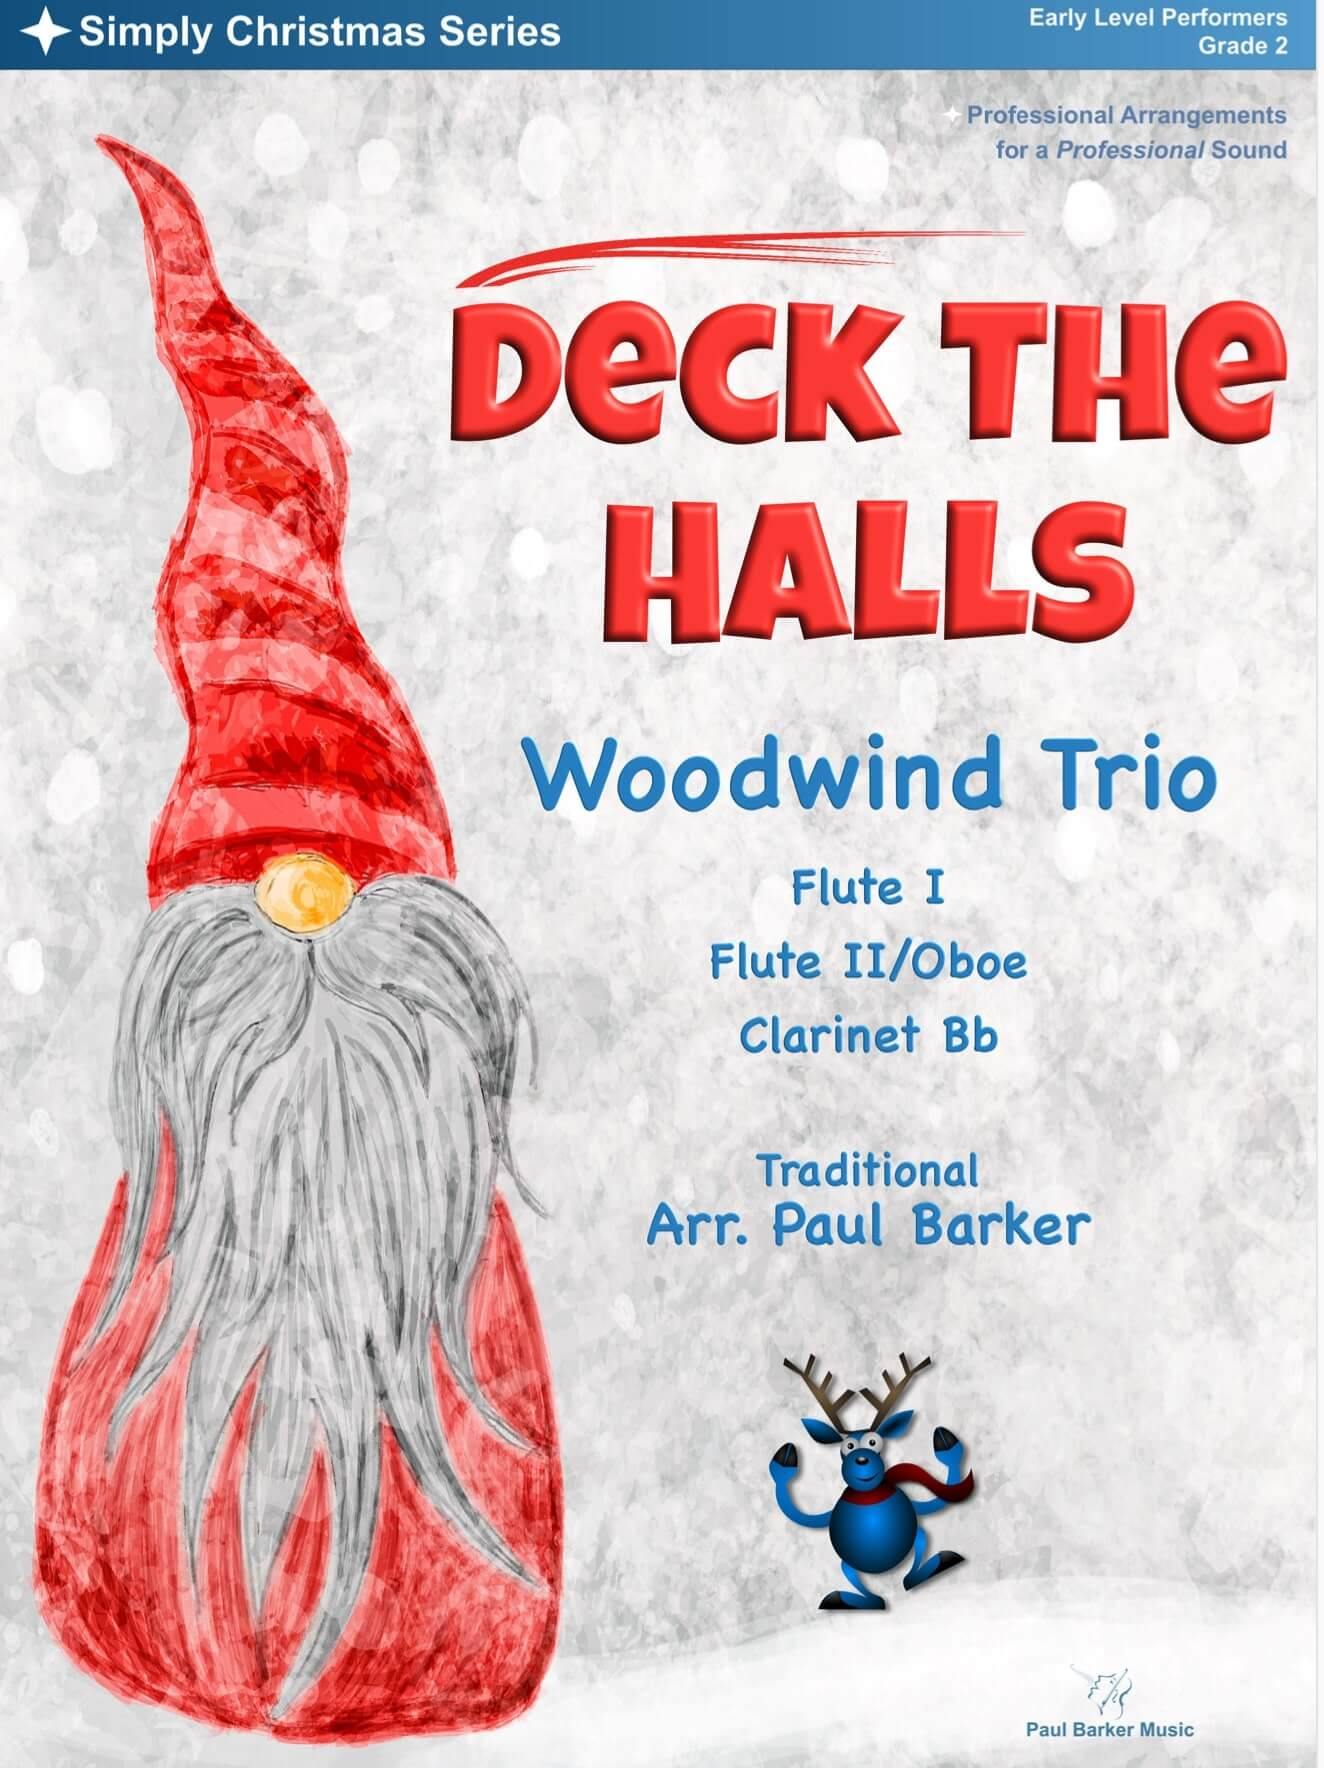 Deck The Halls (Woodwind Trio) - Paul Barker Music 